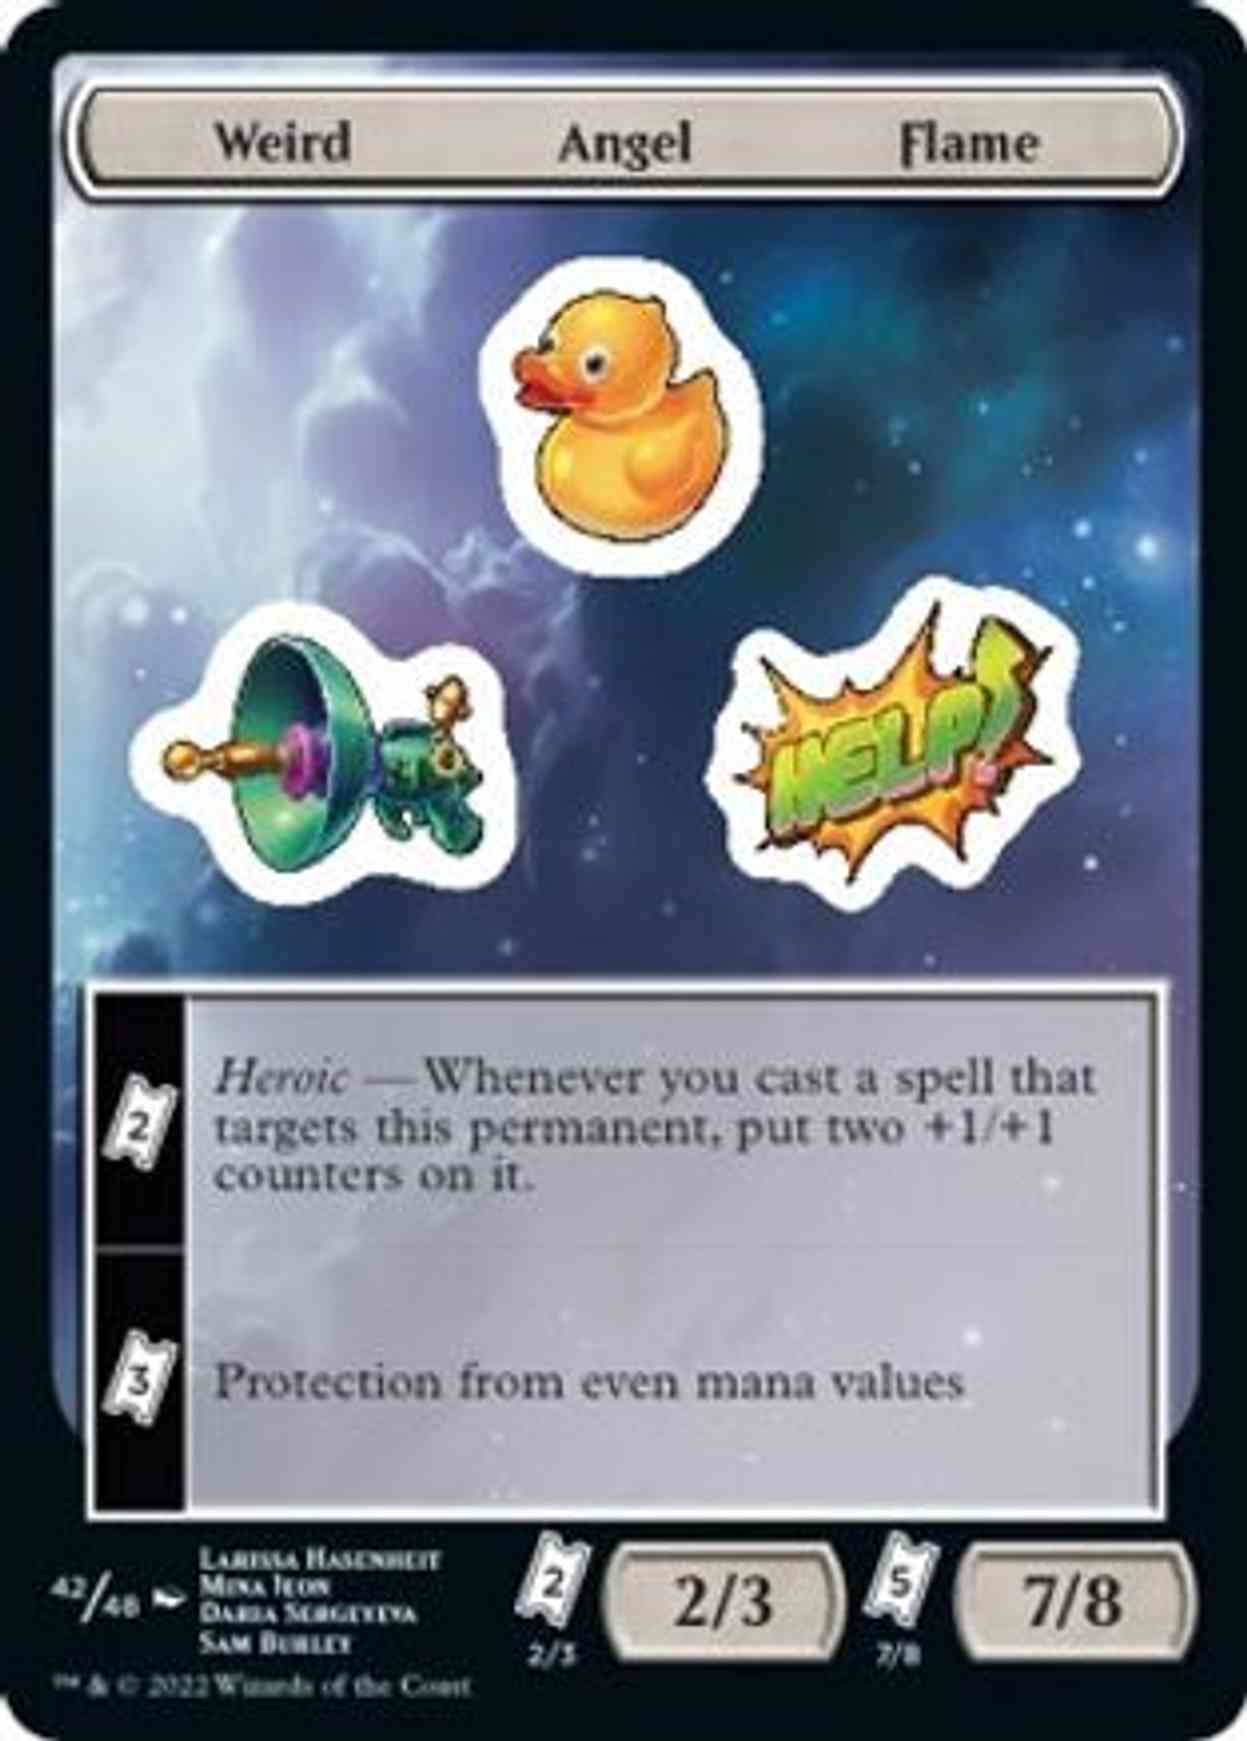 Weird Angel Flame magic card front